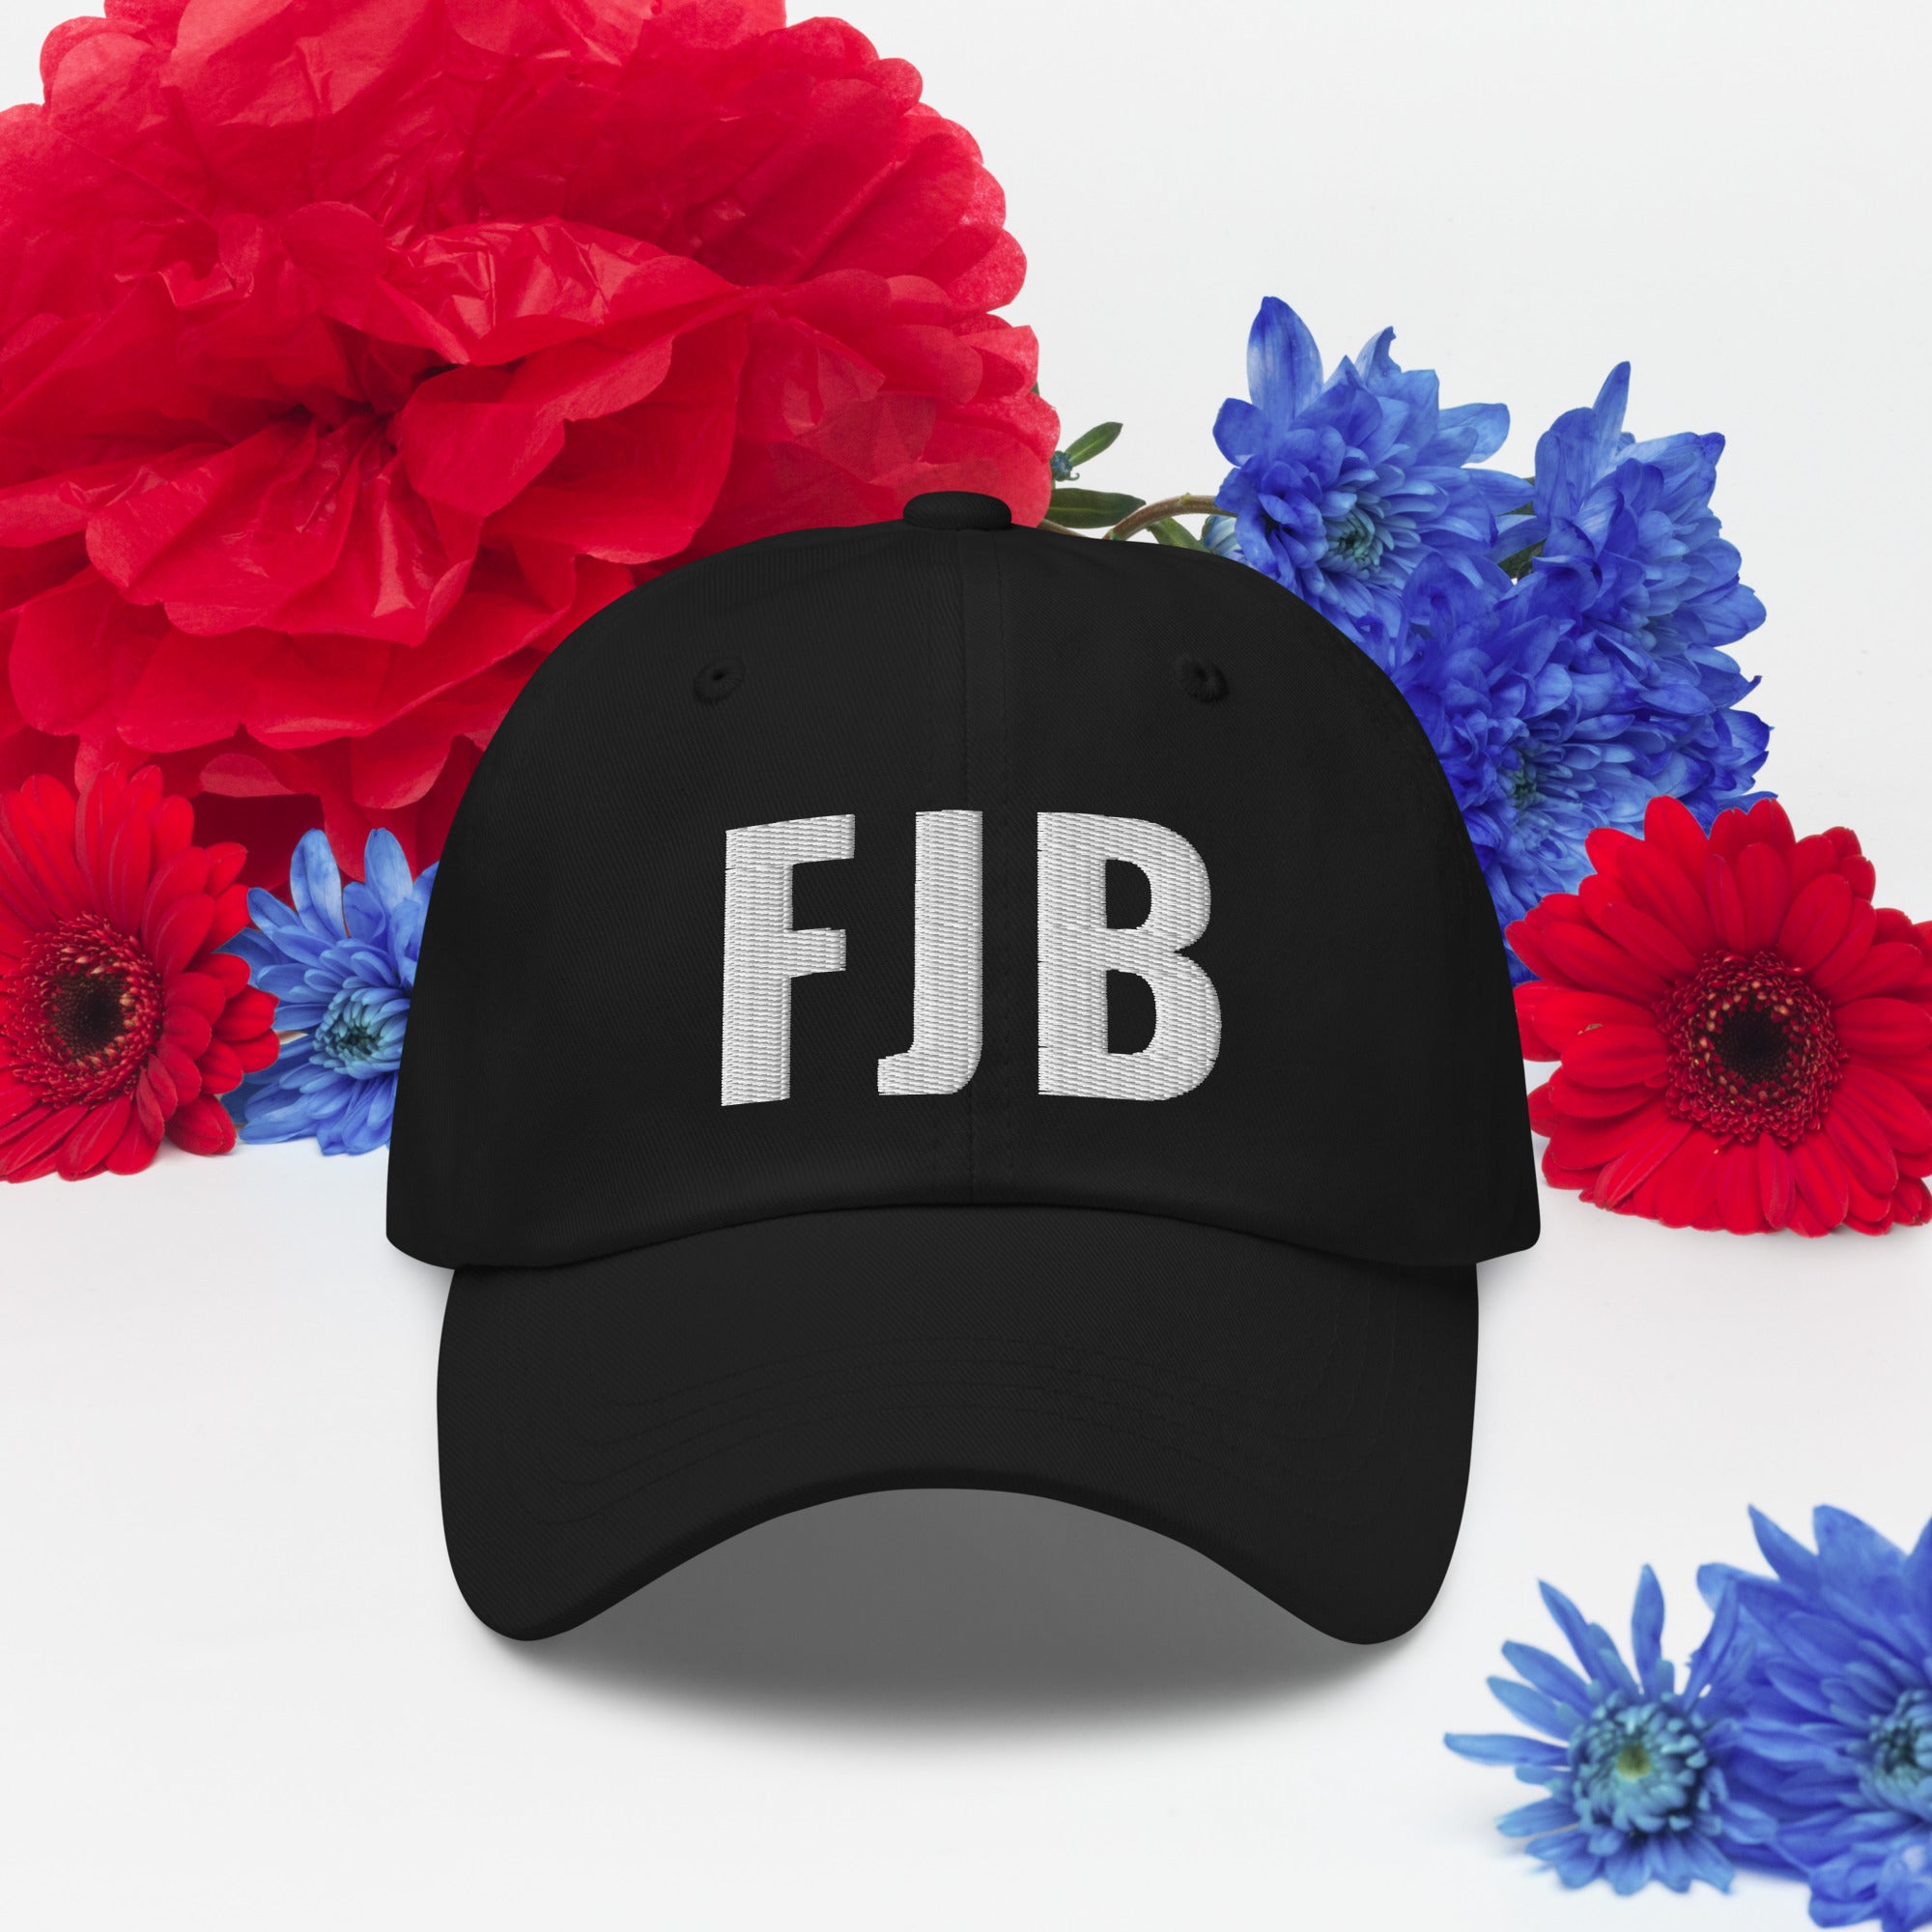 FJB Dad hat, FJB Hat, Anti Biden USA Flag, F Biden Embroidered Cap, Funny Joe Biden Hat, Funny Republican, Political Dad Hat, 8646 hat - Madeinsea©